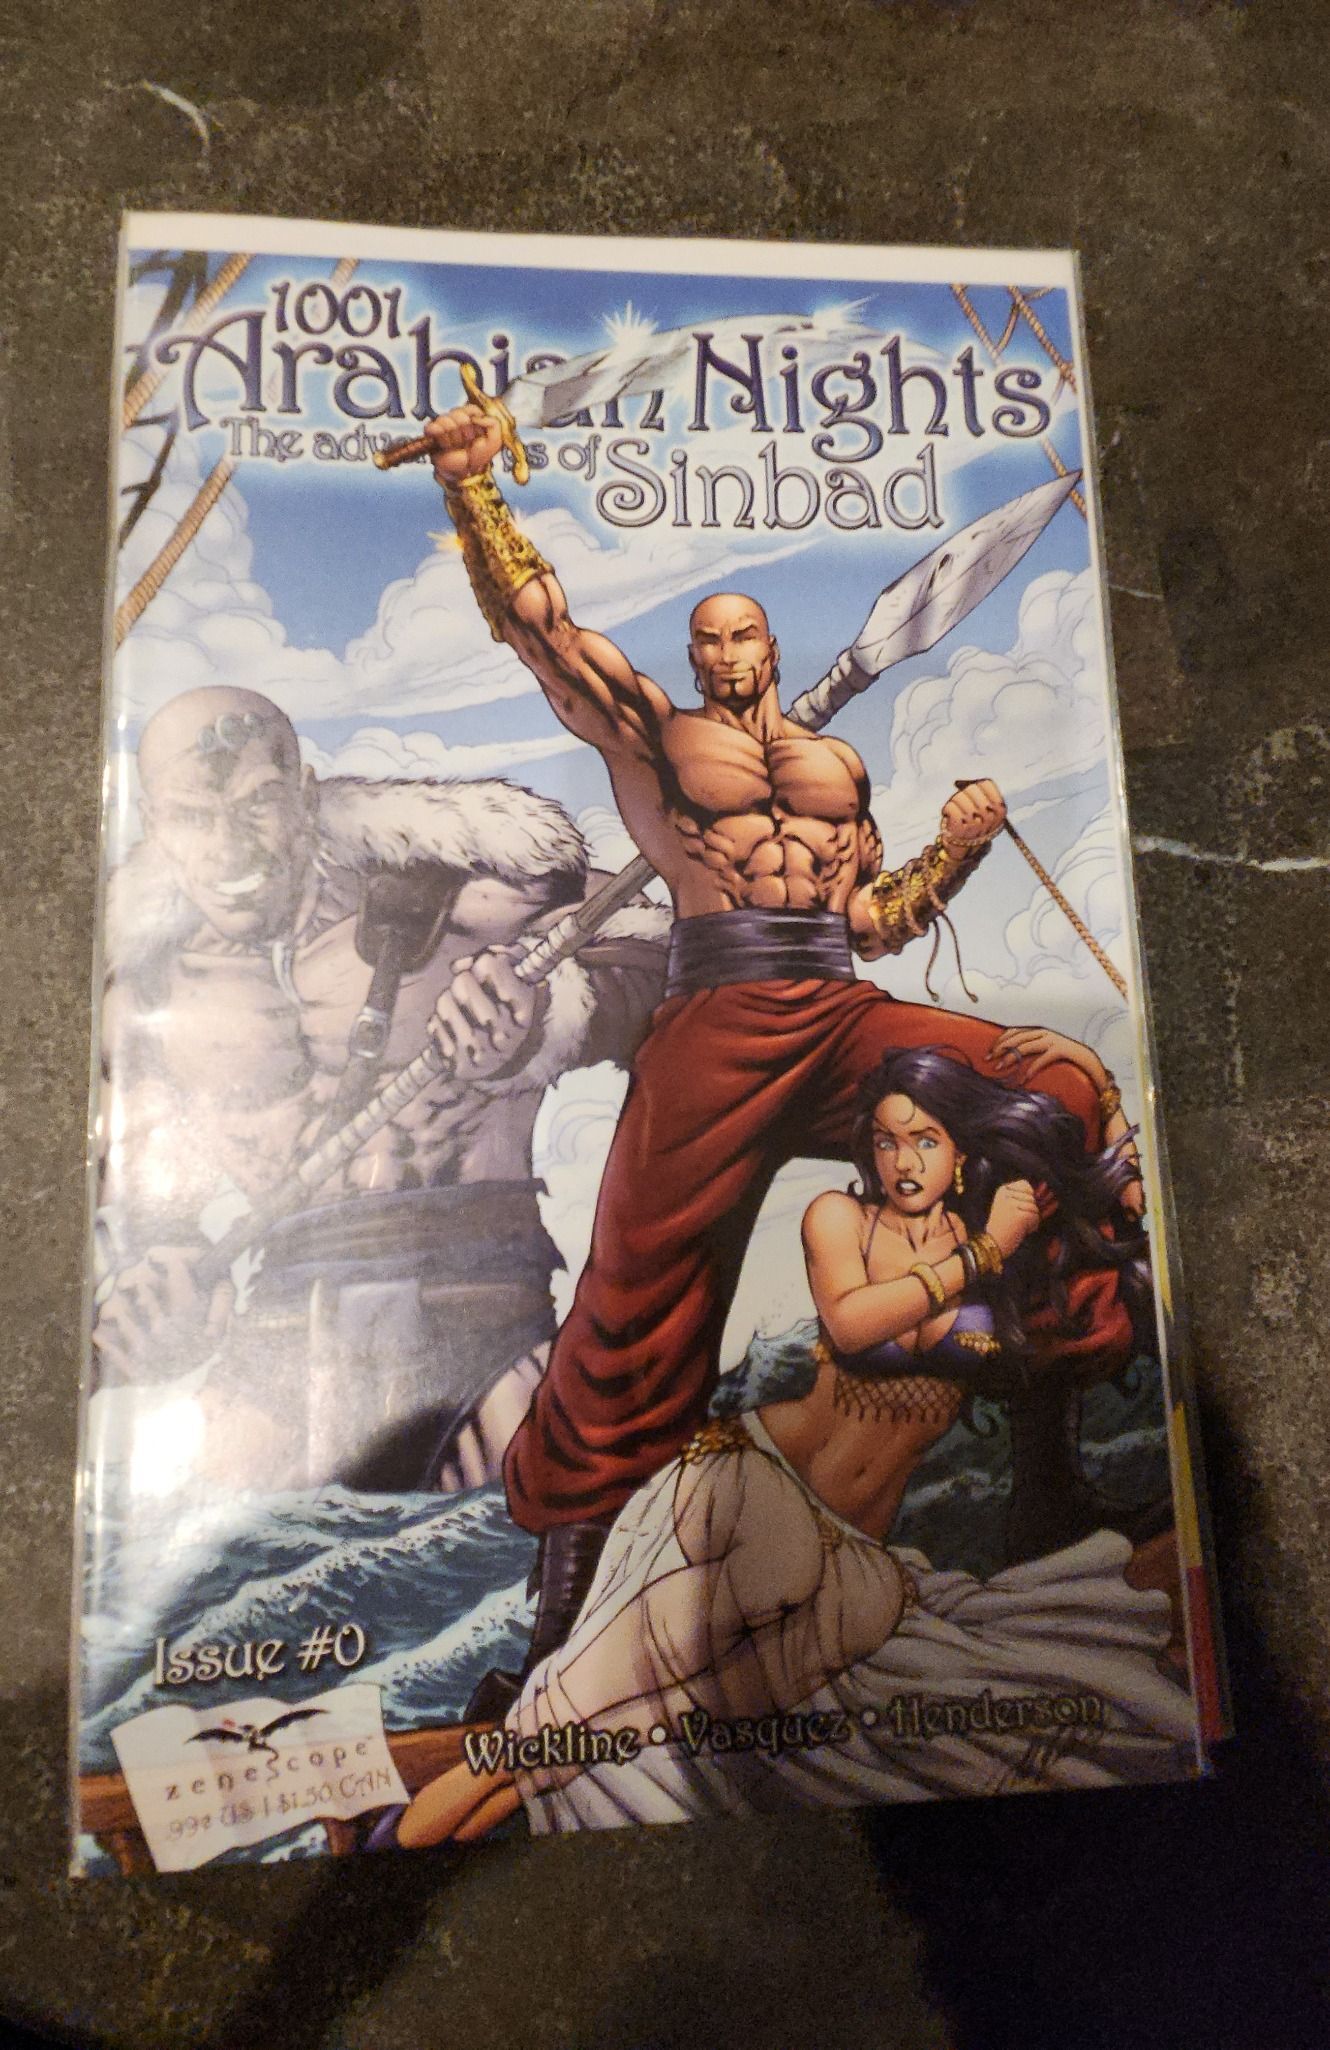 1001 Arabian Nights: The Adventures of Sinbad #0 - 1001 Arabian Nights  (Issue)